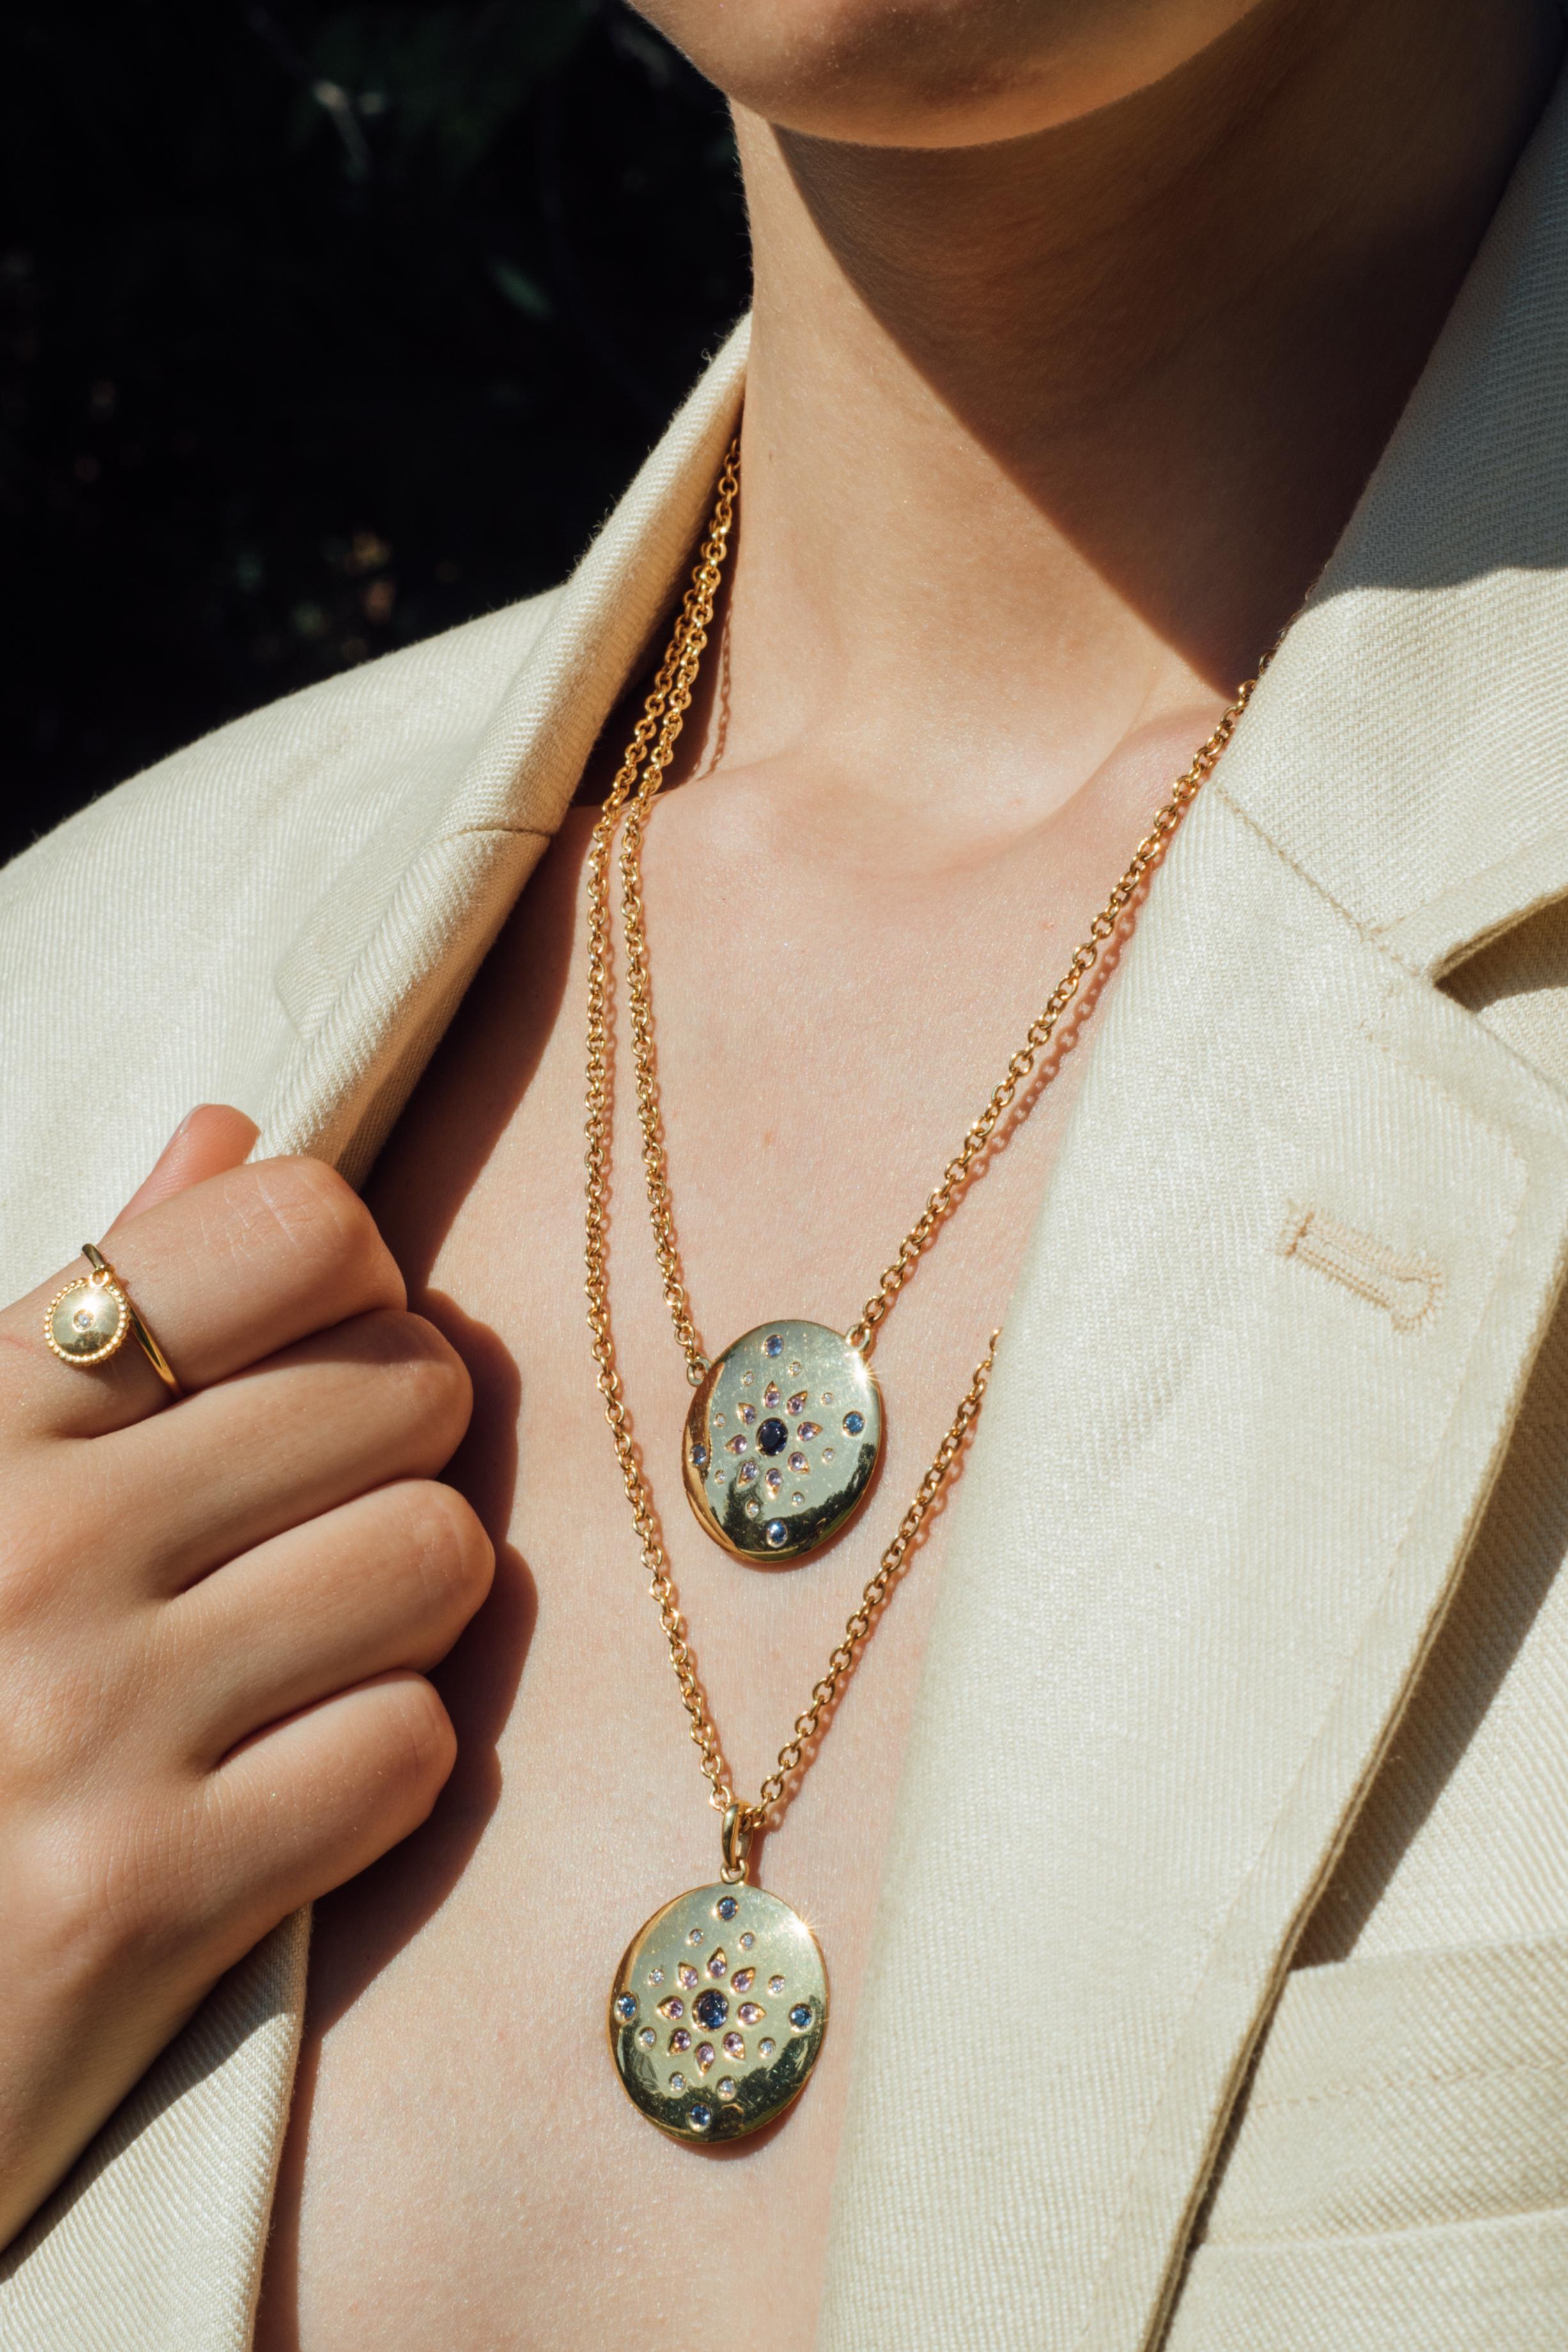 Contemporary Julia-Didon Cayre 18 Karat Yellow Gold Diamond and Sapphire Necklace Long Chain